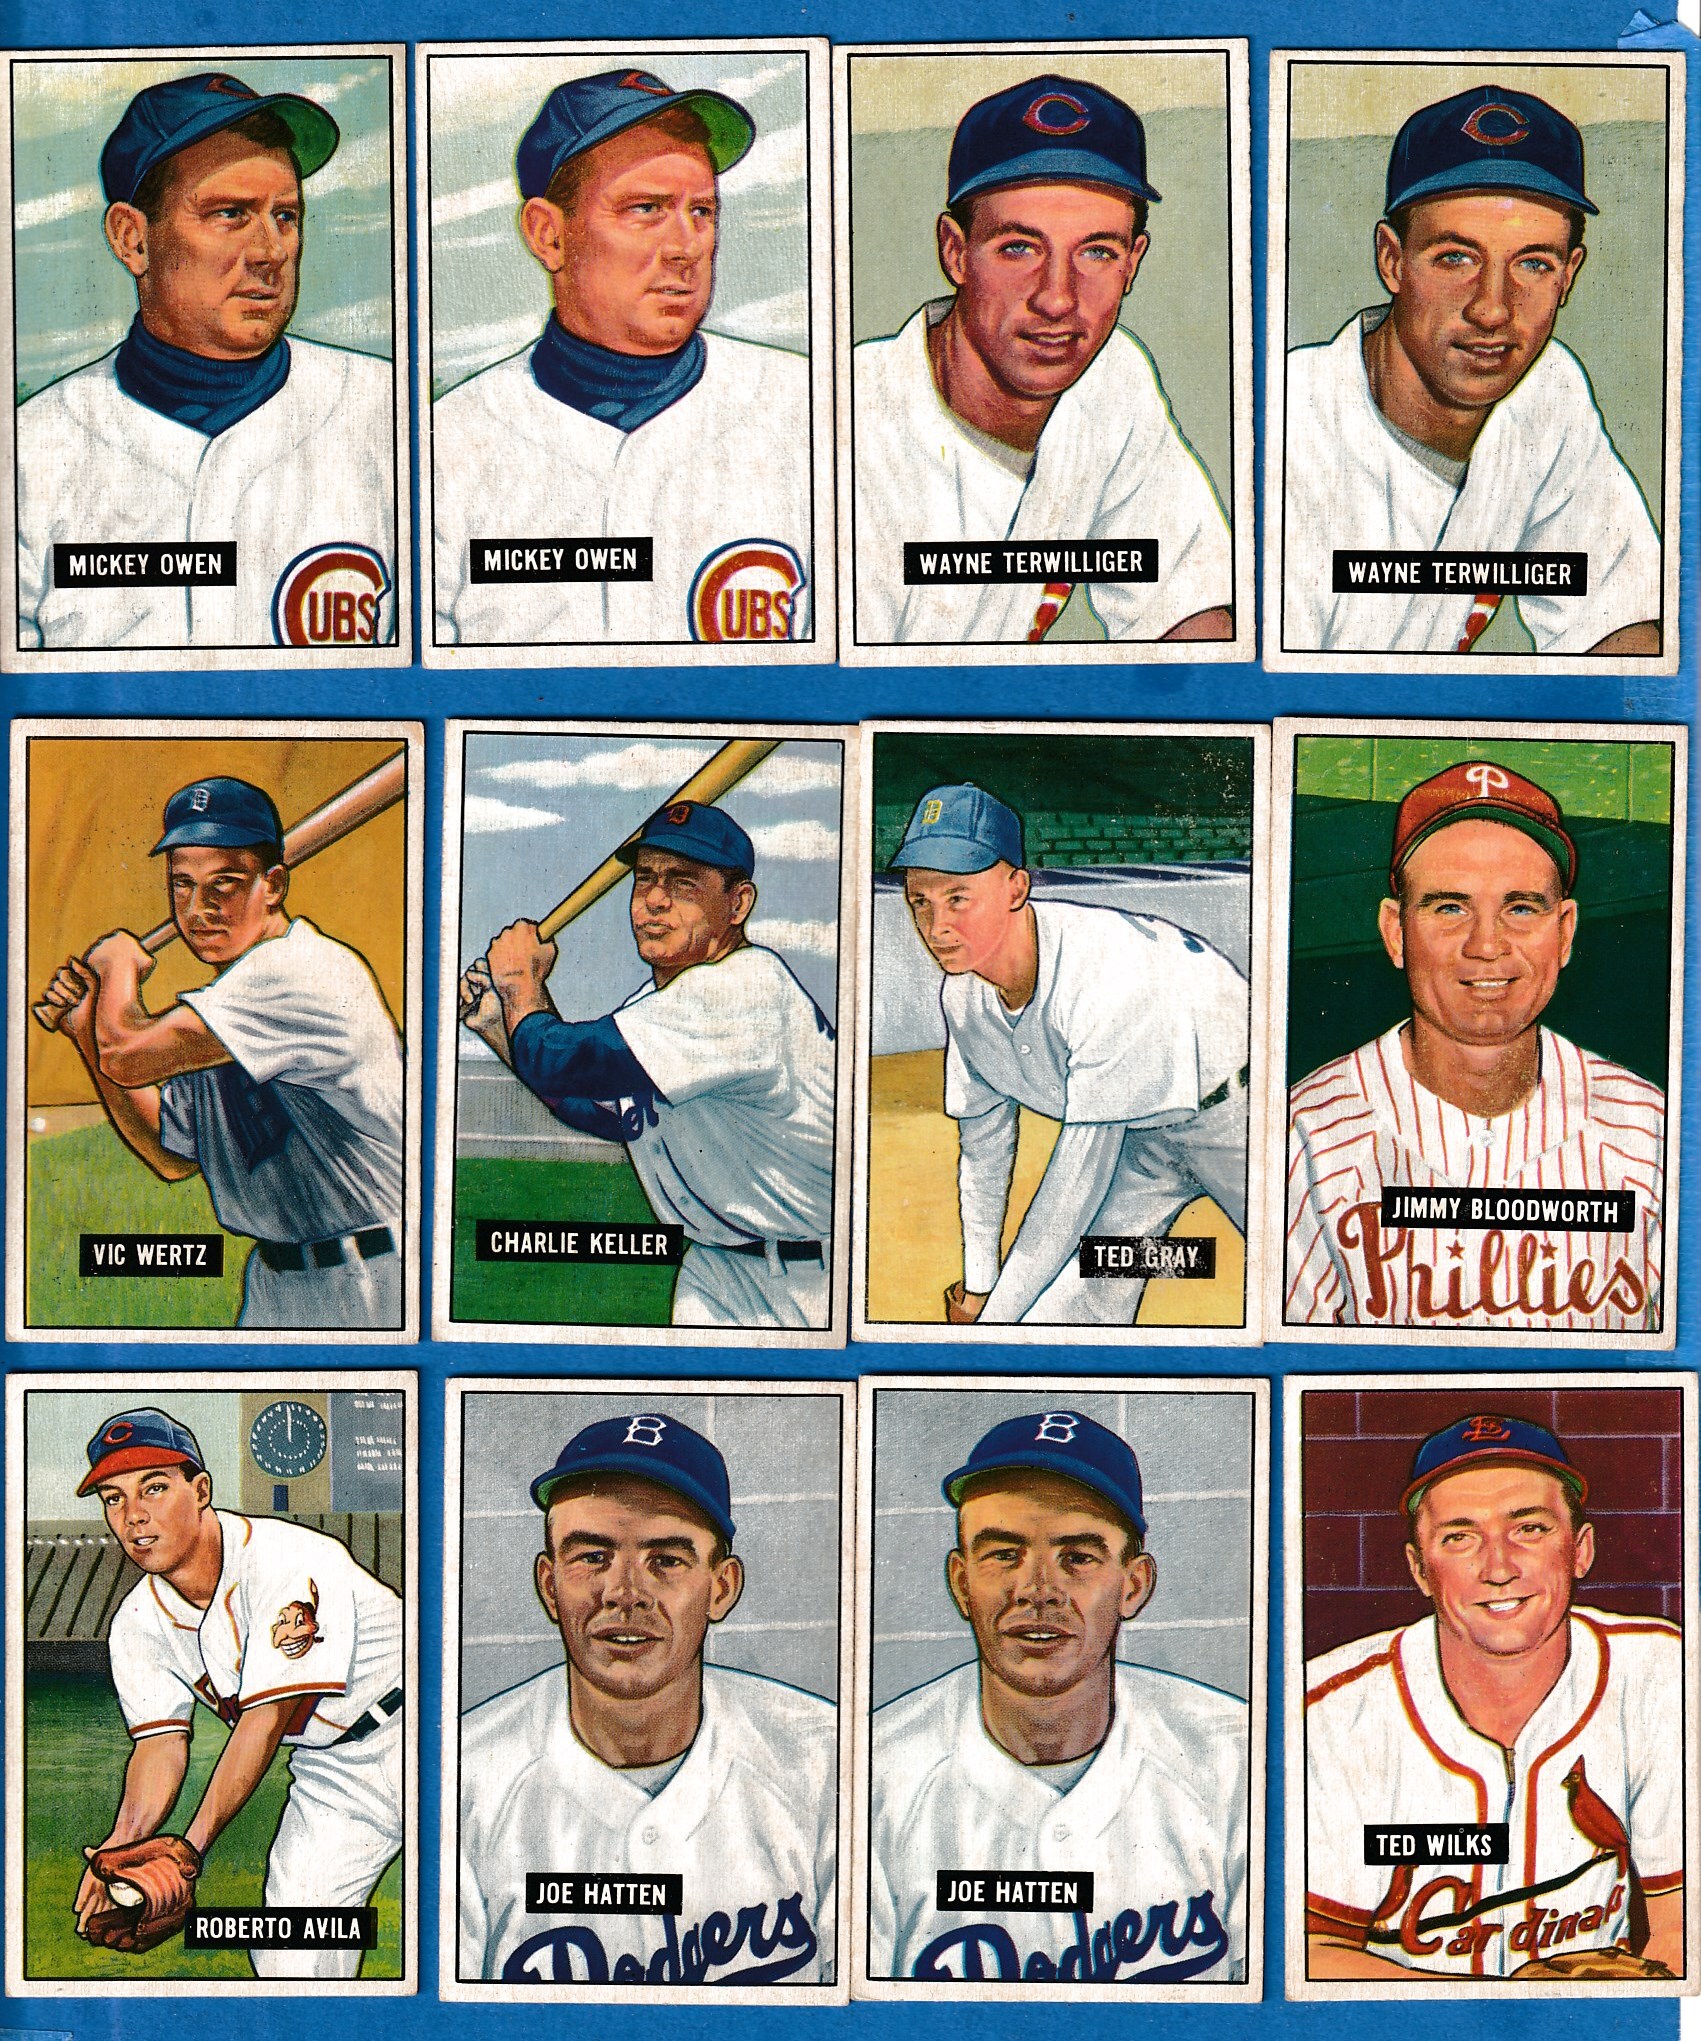 1951 Bowman #190 Joe Hatten (Brooklyn Dodgers) Baseball cards value